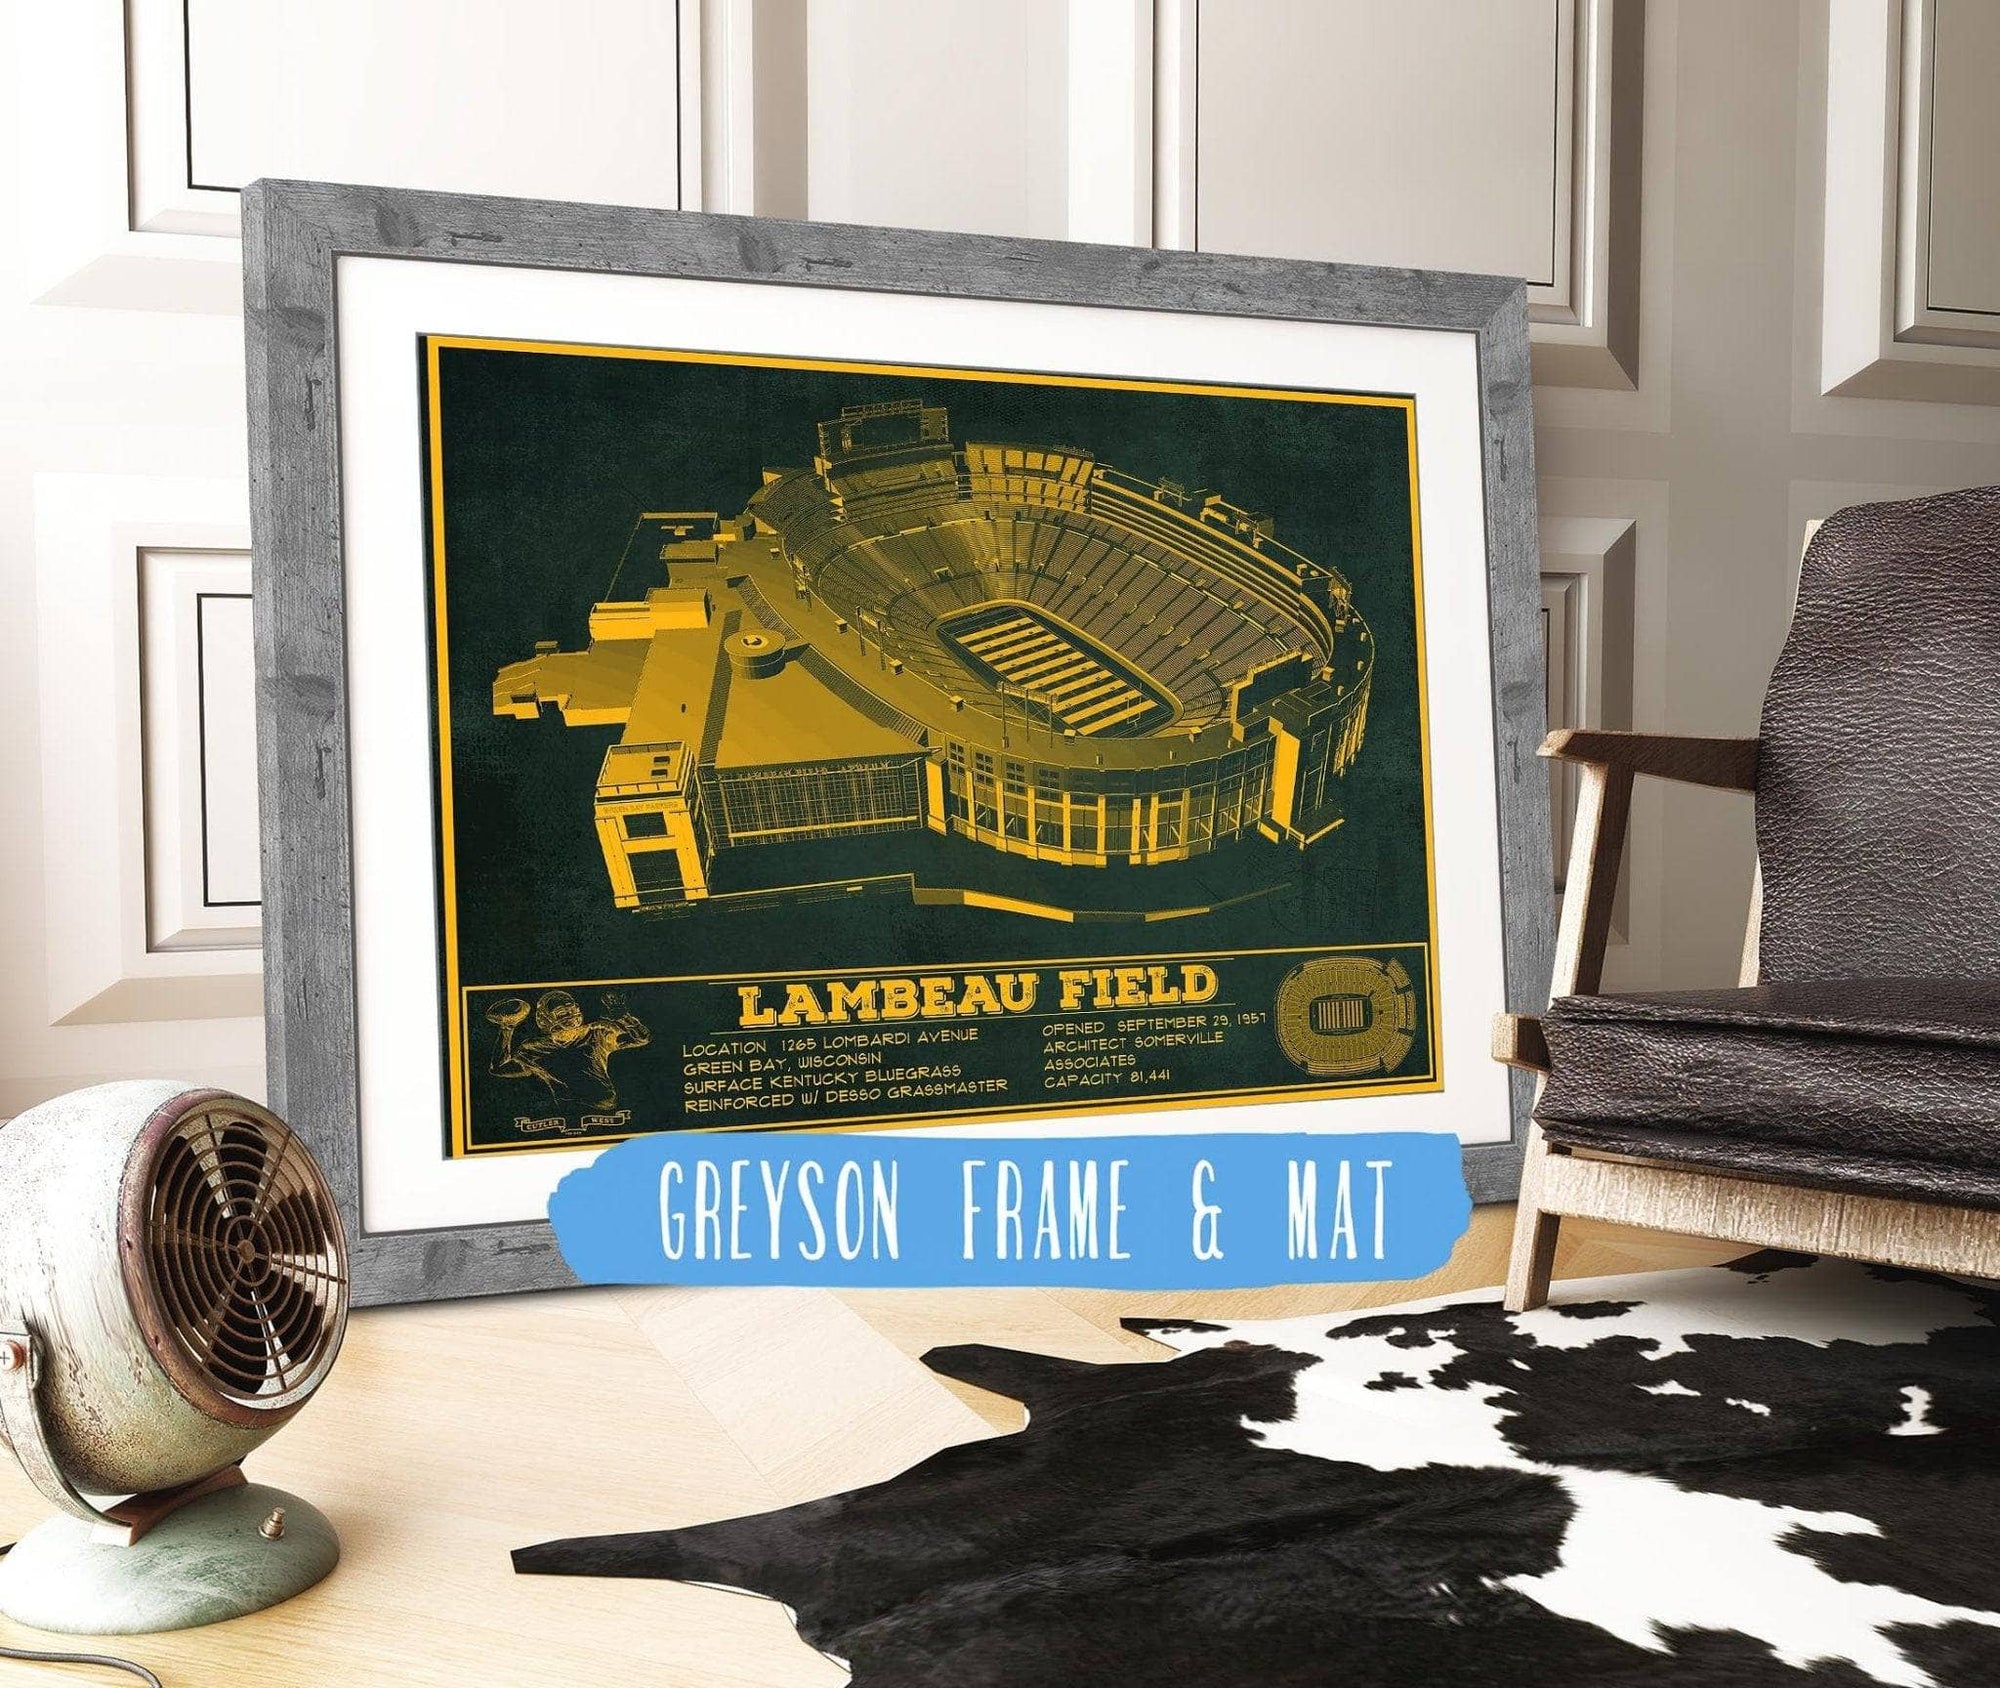 Cutler West Pro Football Collection 14" x 11" / Greyson Frame & Mat Green Bay Packers - Lambeau Field Vintage Football Print 698877220-TEAM